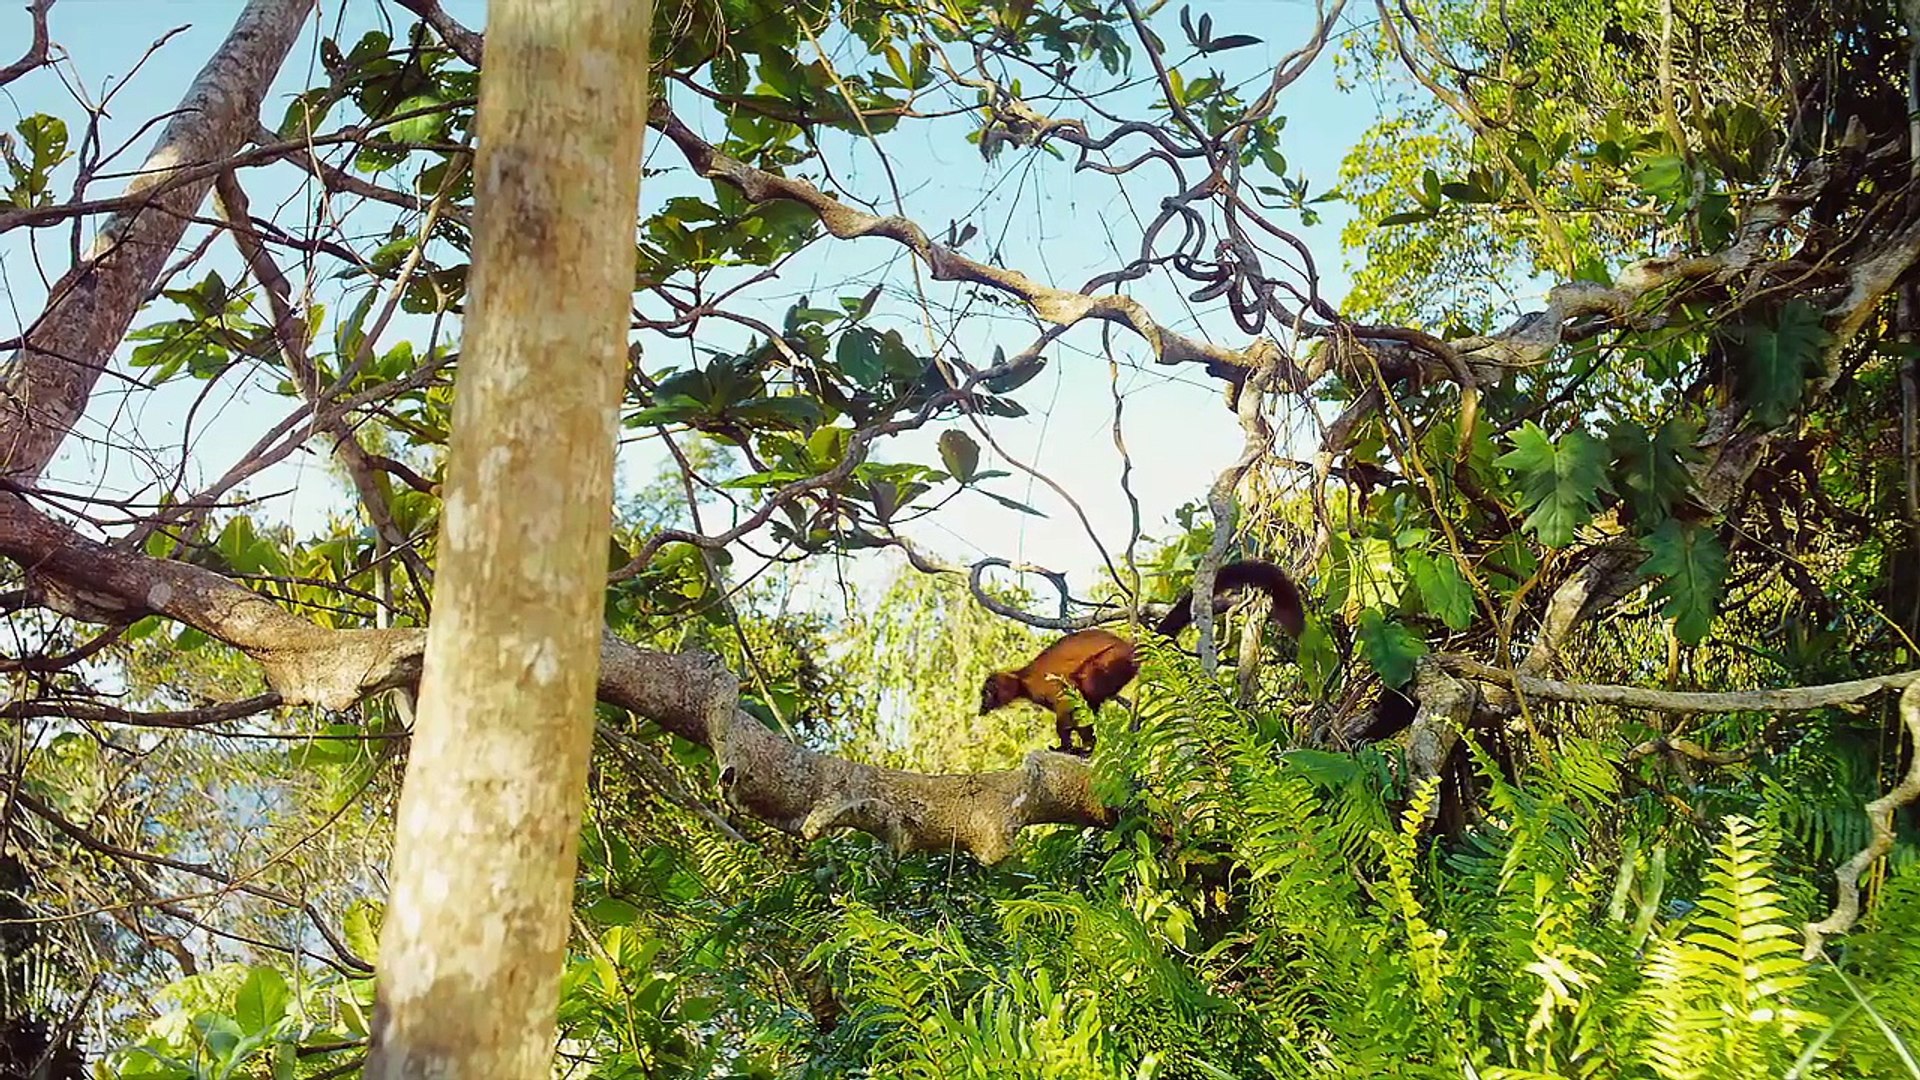 Island of Lemurs: Madagascar Official Trailer #1 (2014) - Nature Documentary HD